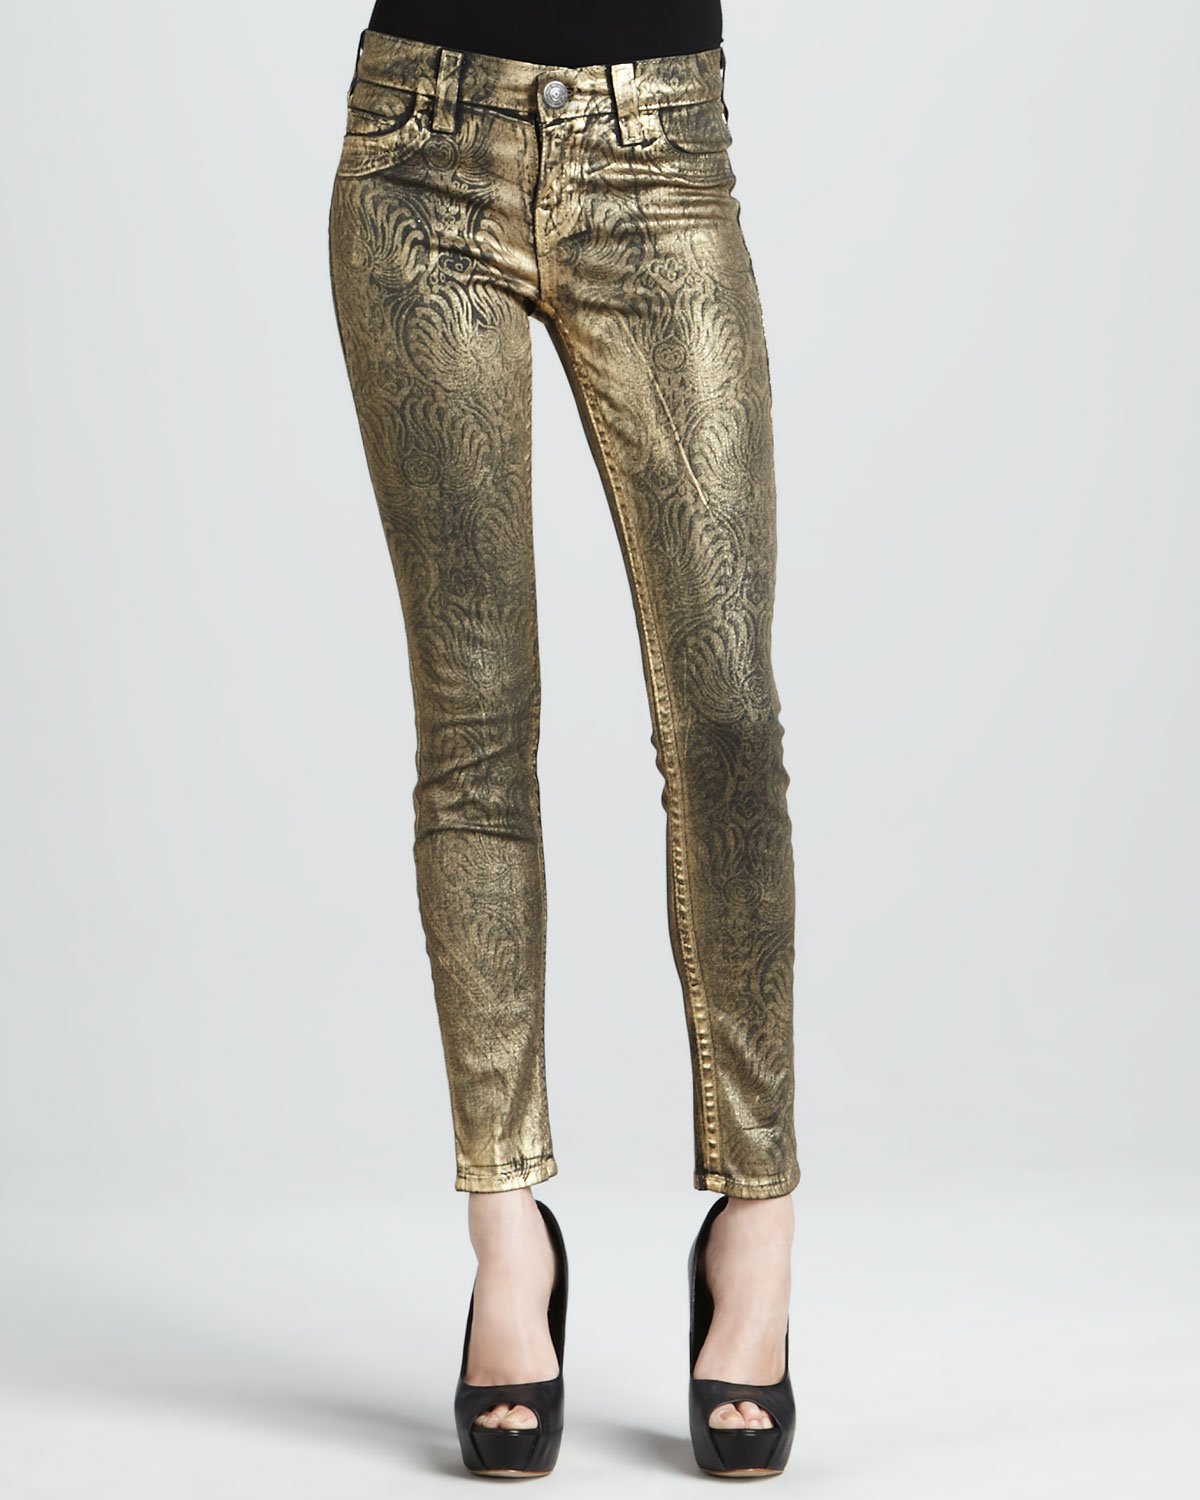 Lyst - True religion Casey Gold Foil Printed Skinny Jeans in Metallic